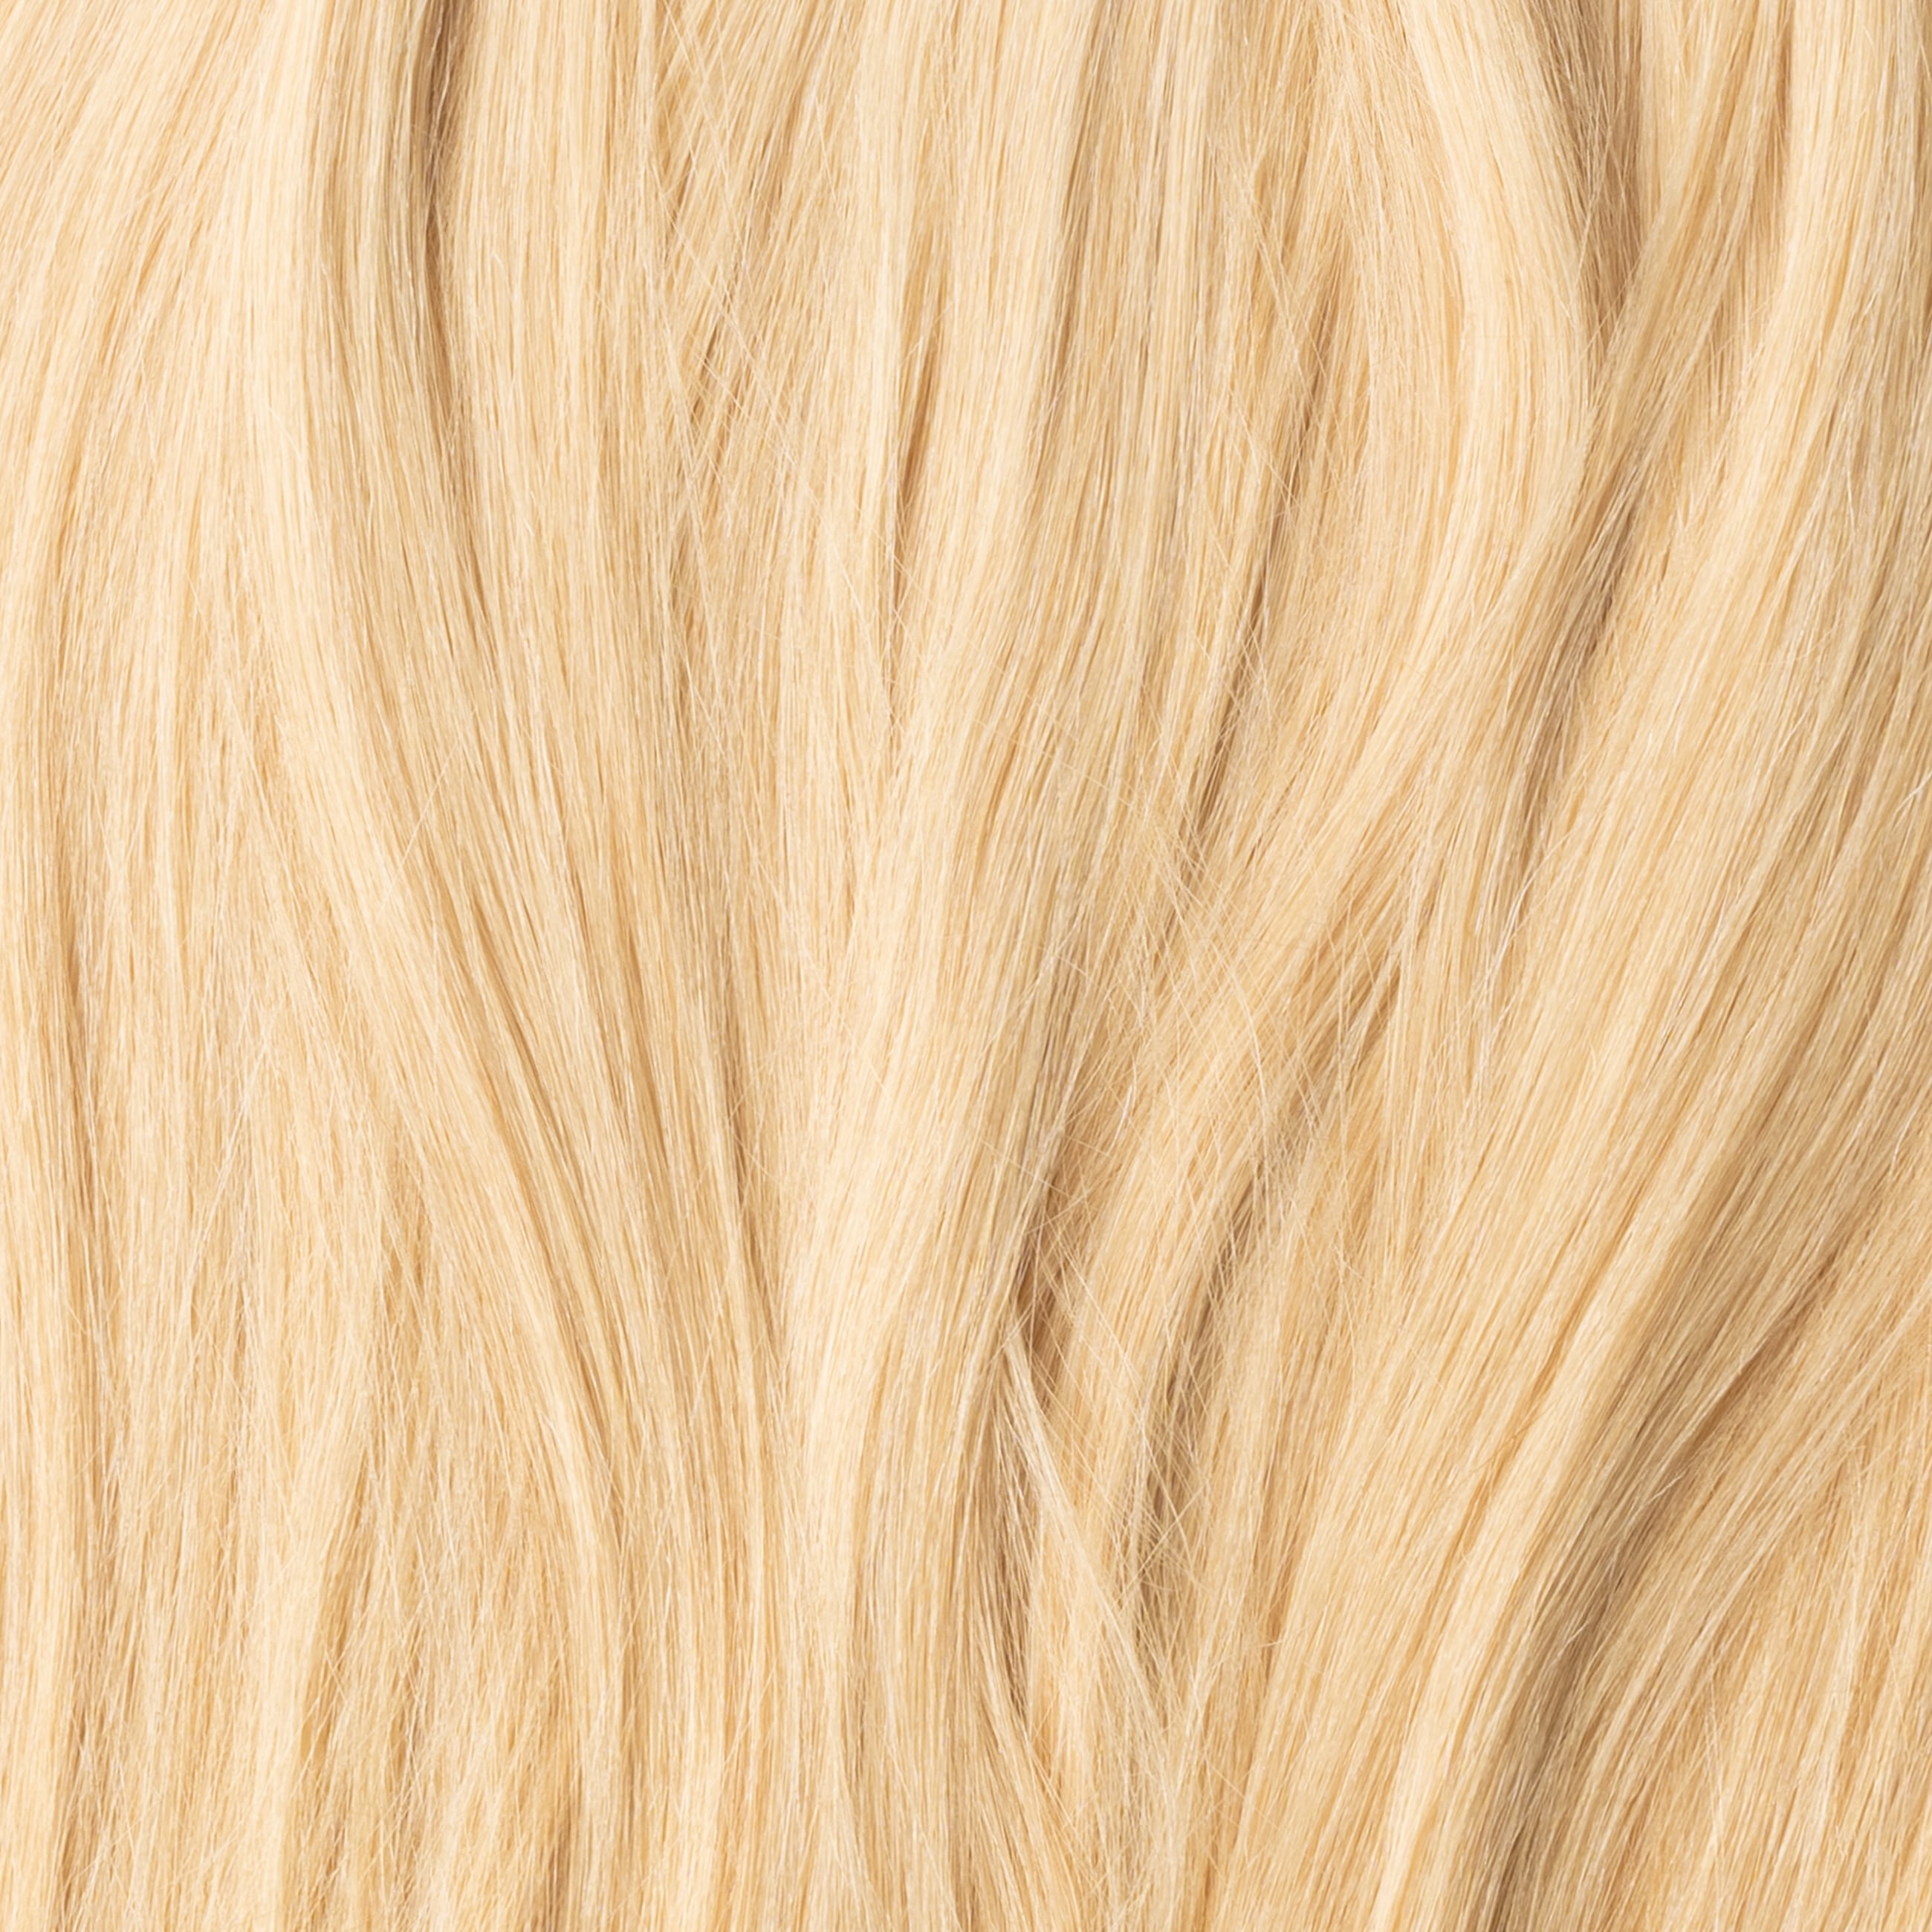 Halo hair extensions - Gyldenblond nr. 22